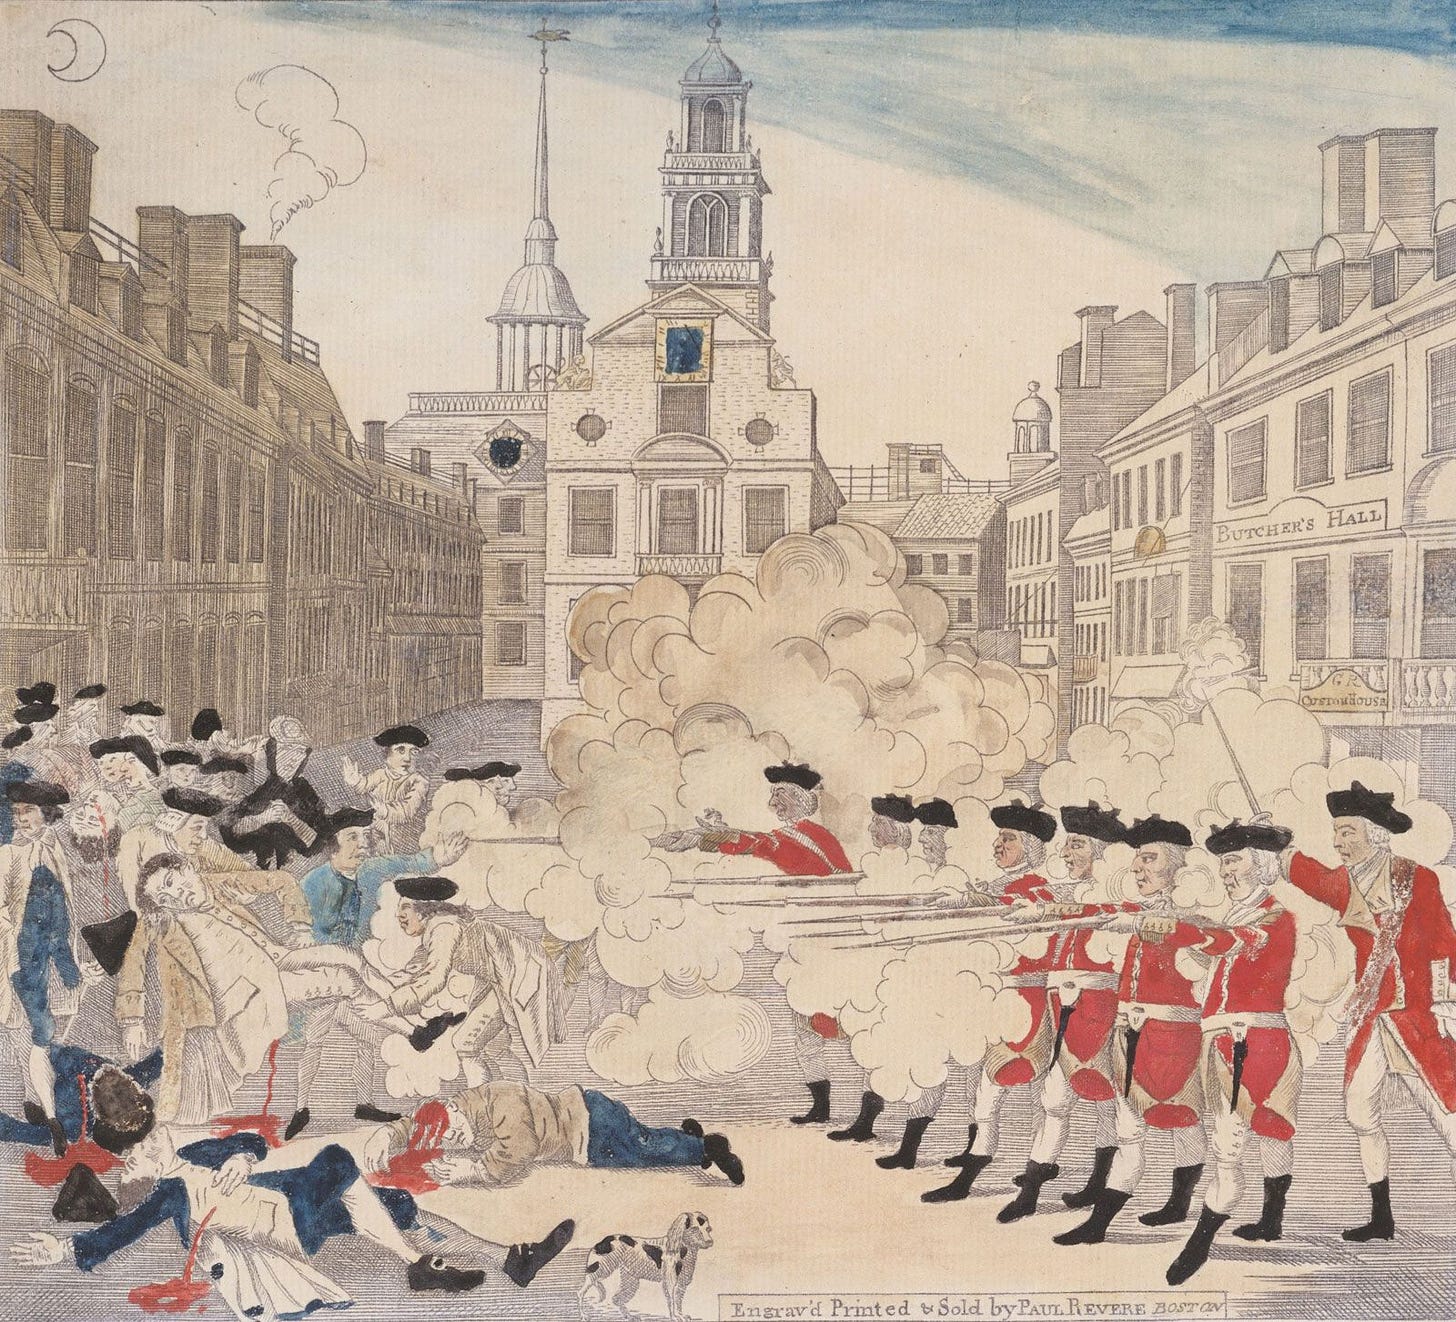 Boston Massacre | History, Facts, Site, Deaths, & Trial | Britannica